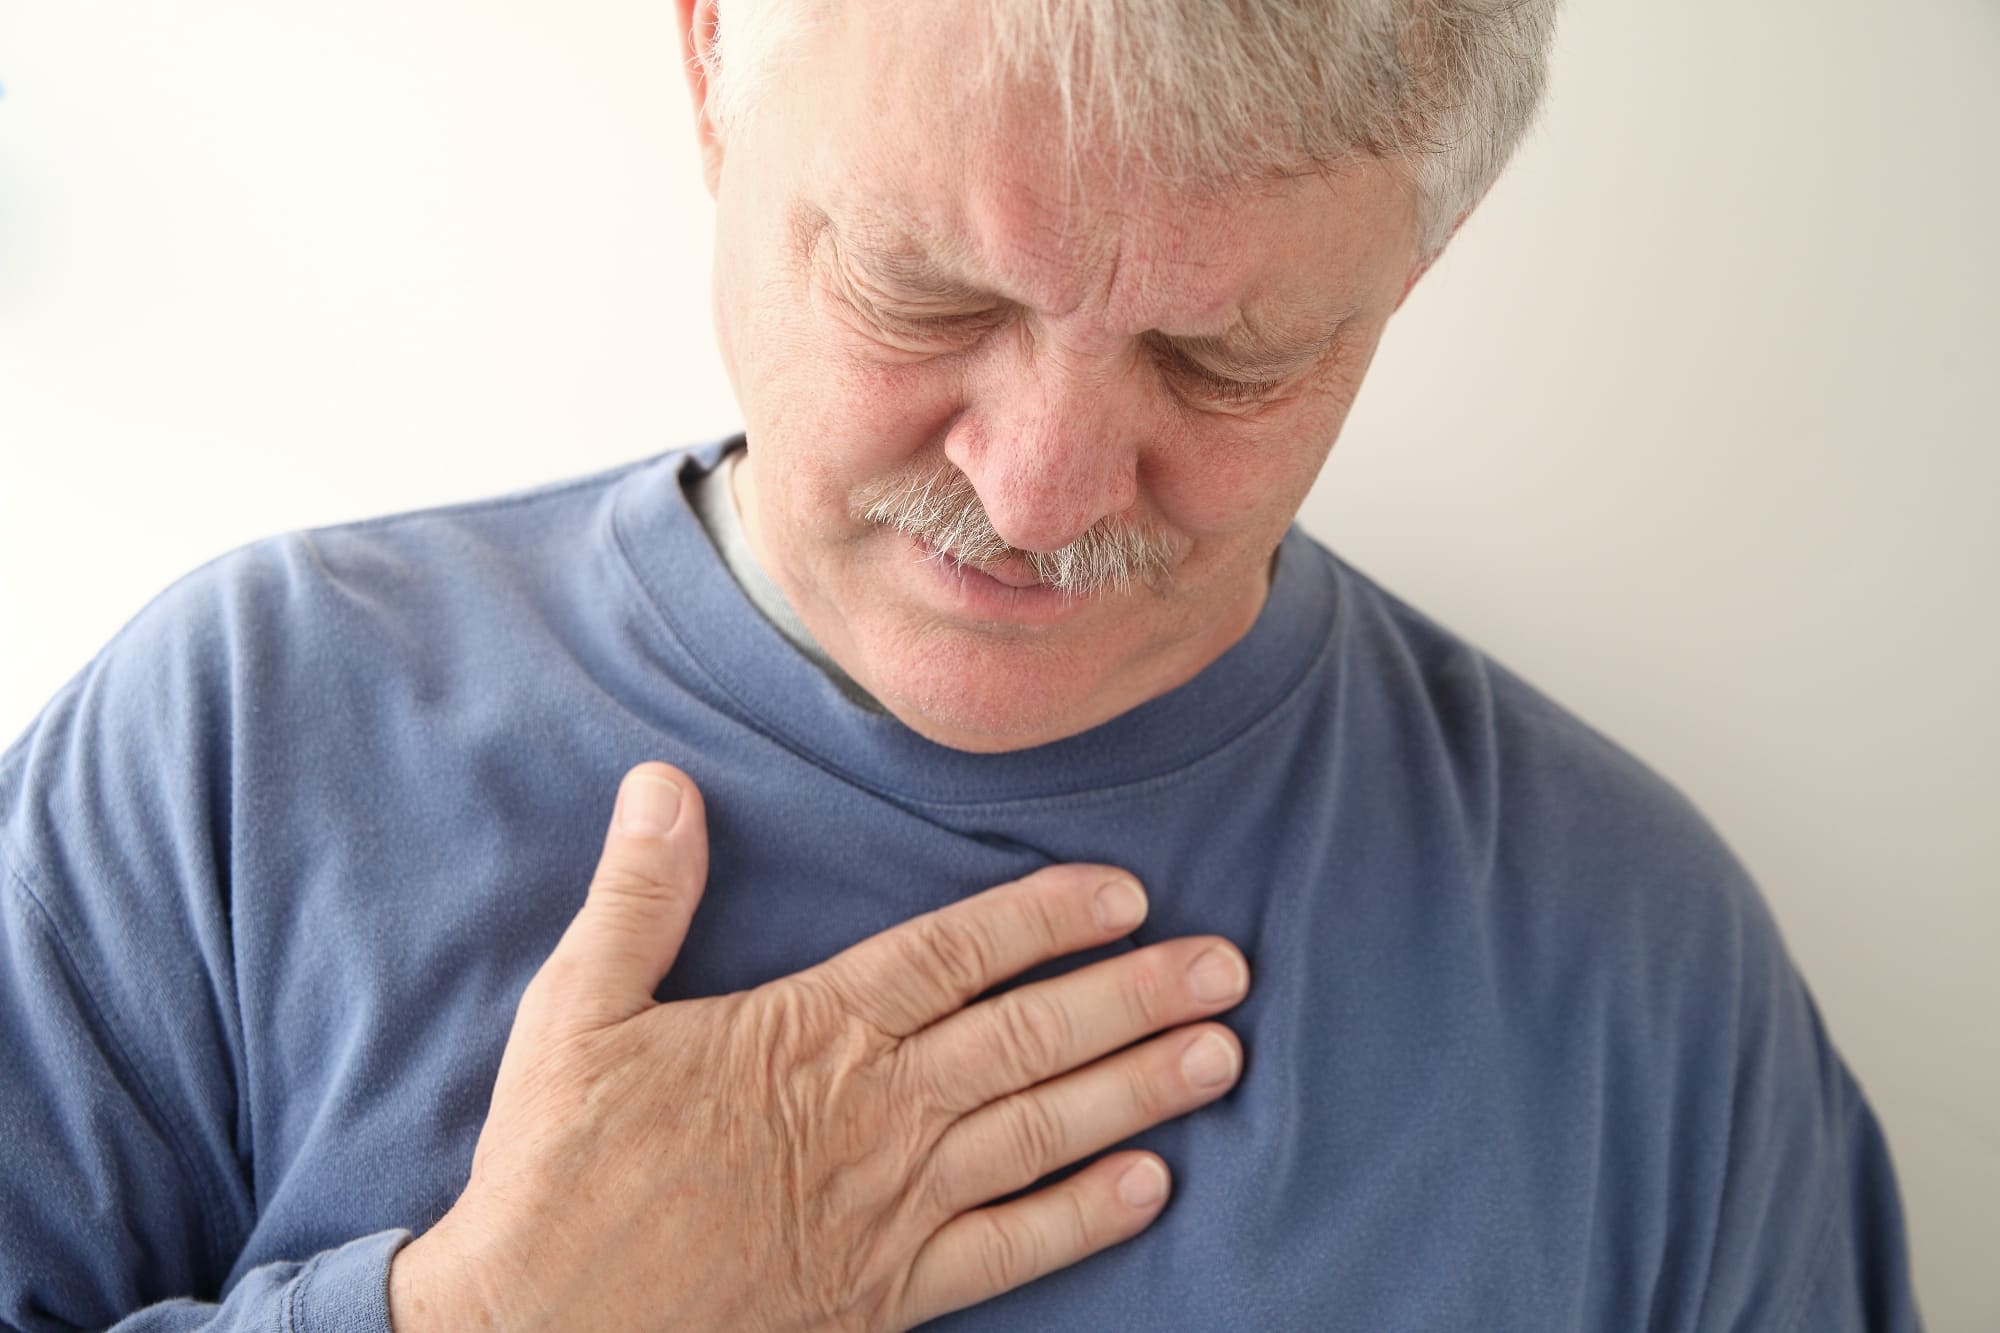 zantac-older-man-with-heartburn-pain